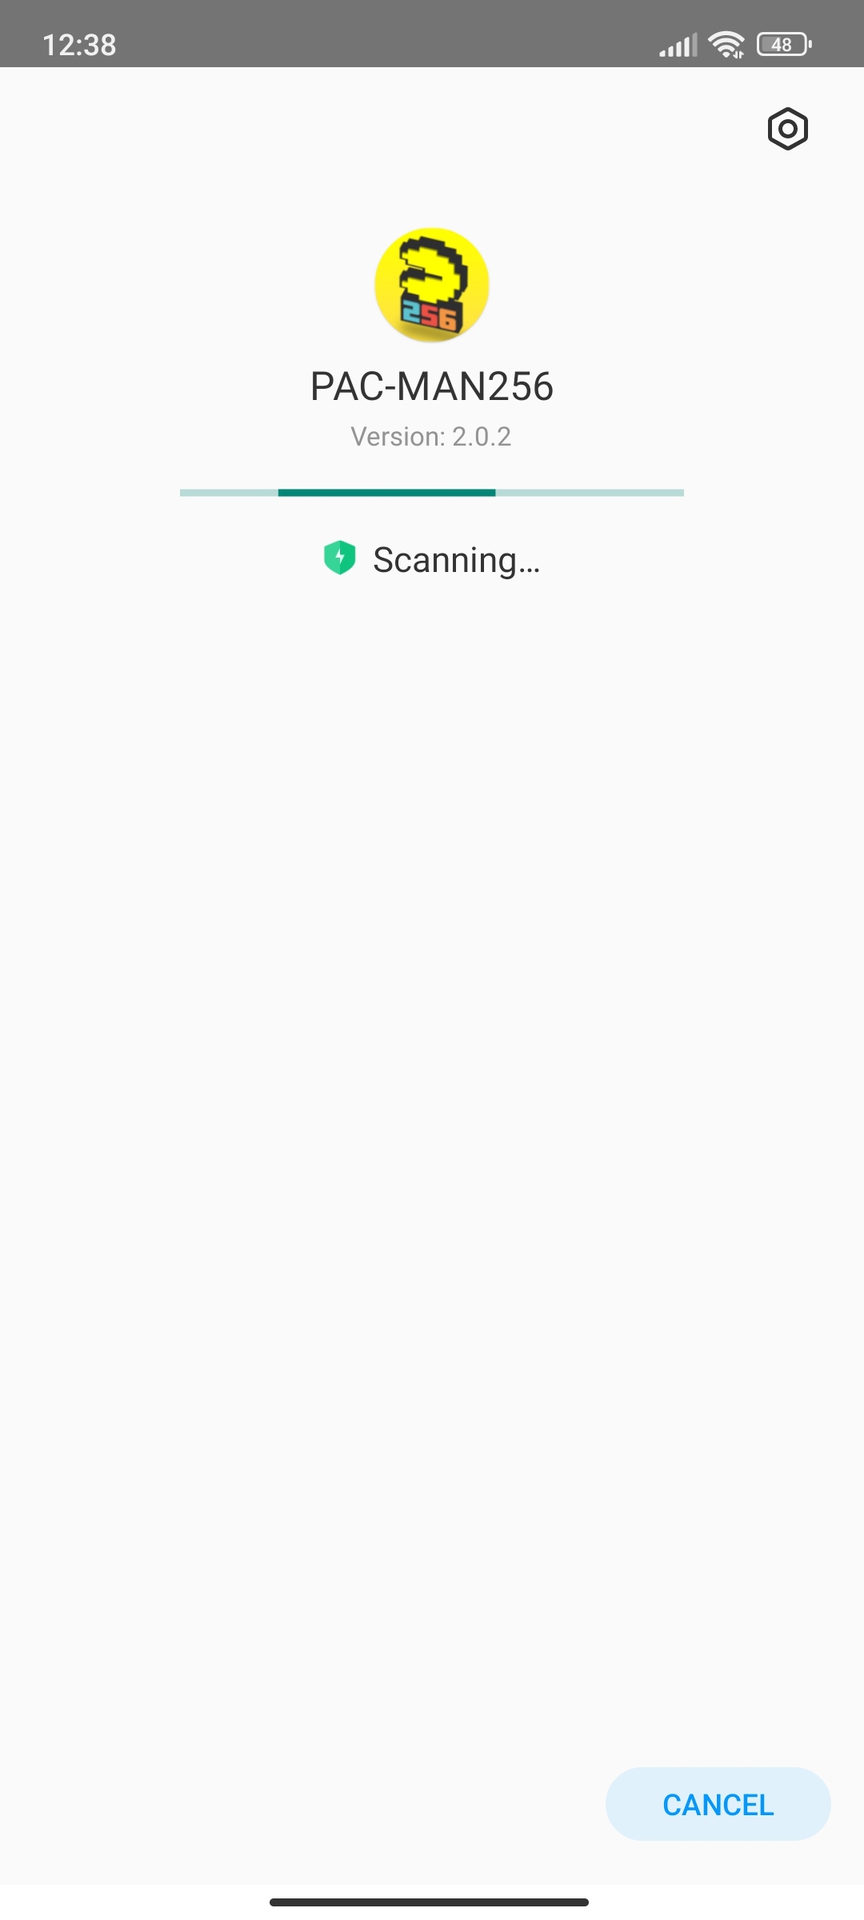 MIUI scanning screen 1